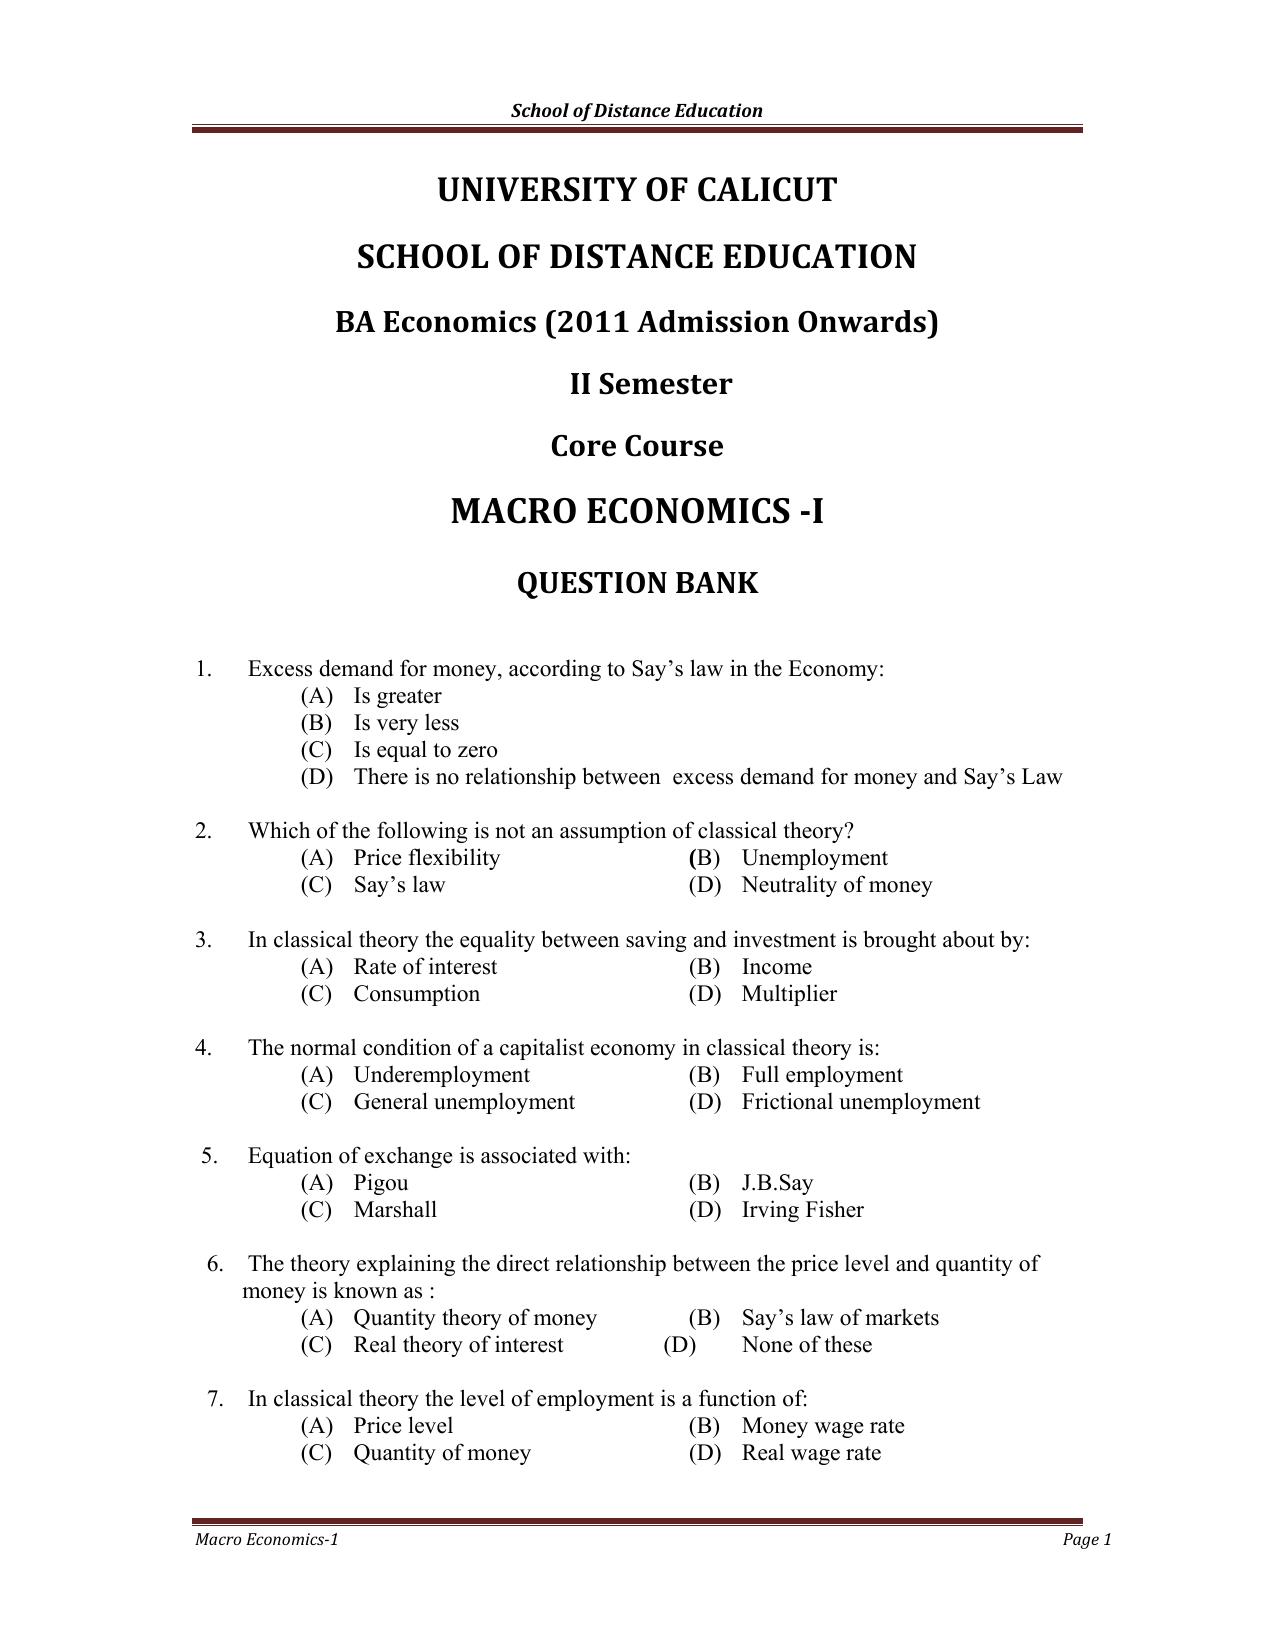 Microsoft Word - Question Bank BA Economics II Sem. Core Course Macro Economics-1